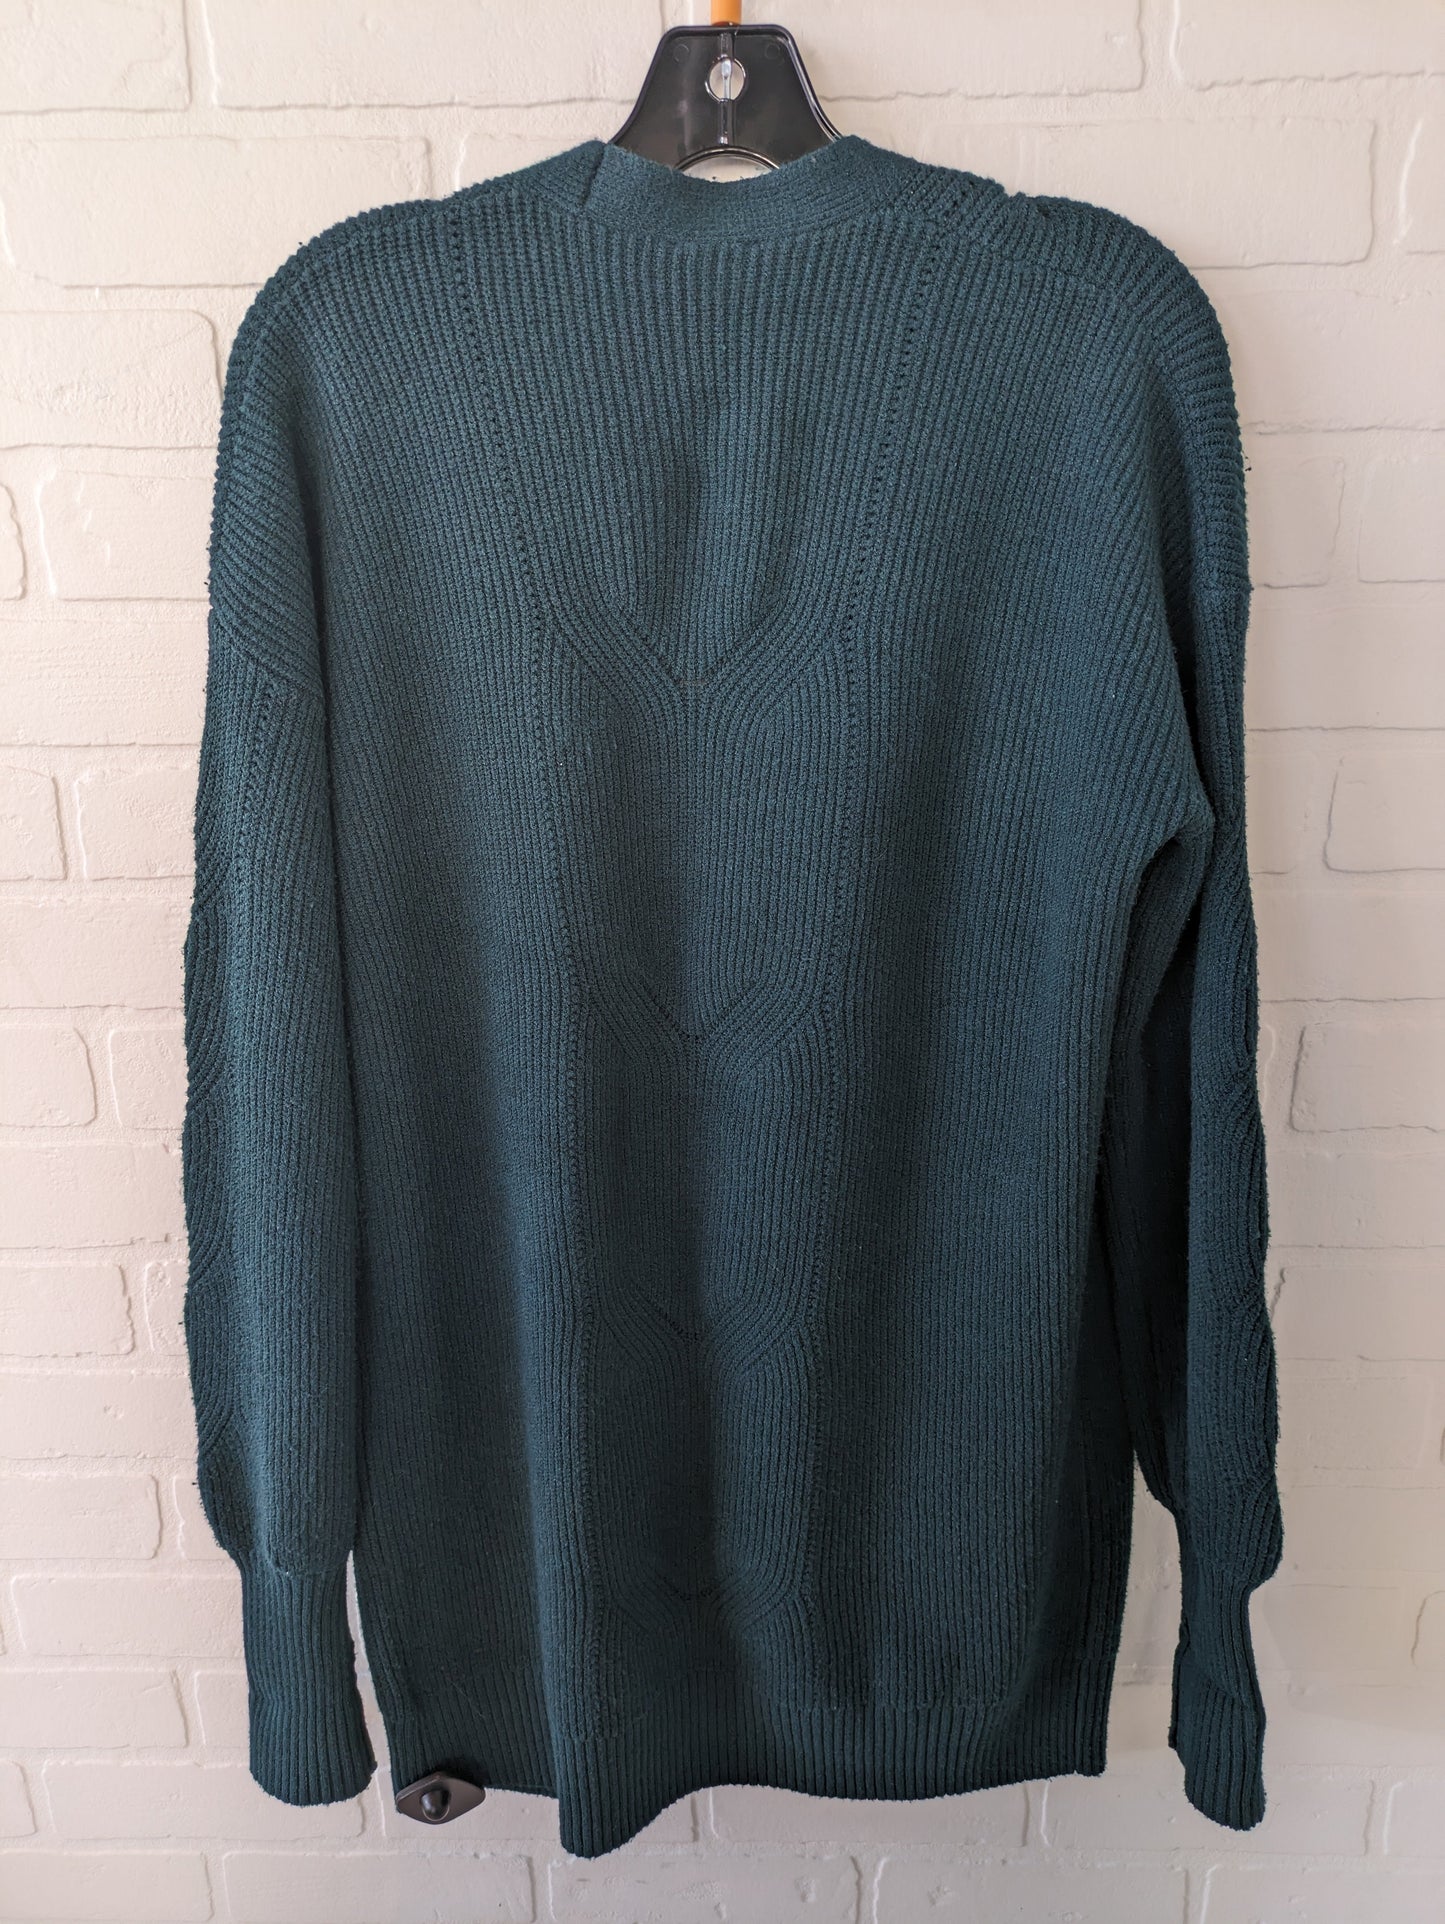 Sweater Cardigan By Hem & Thread  Size: M